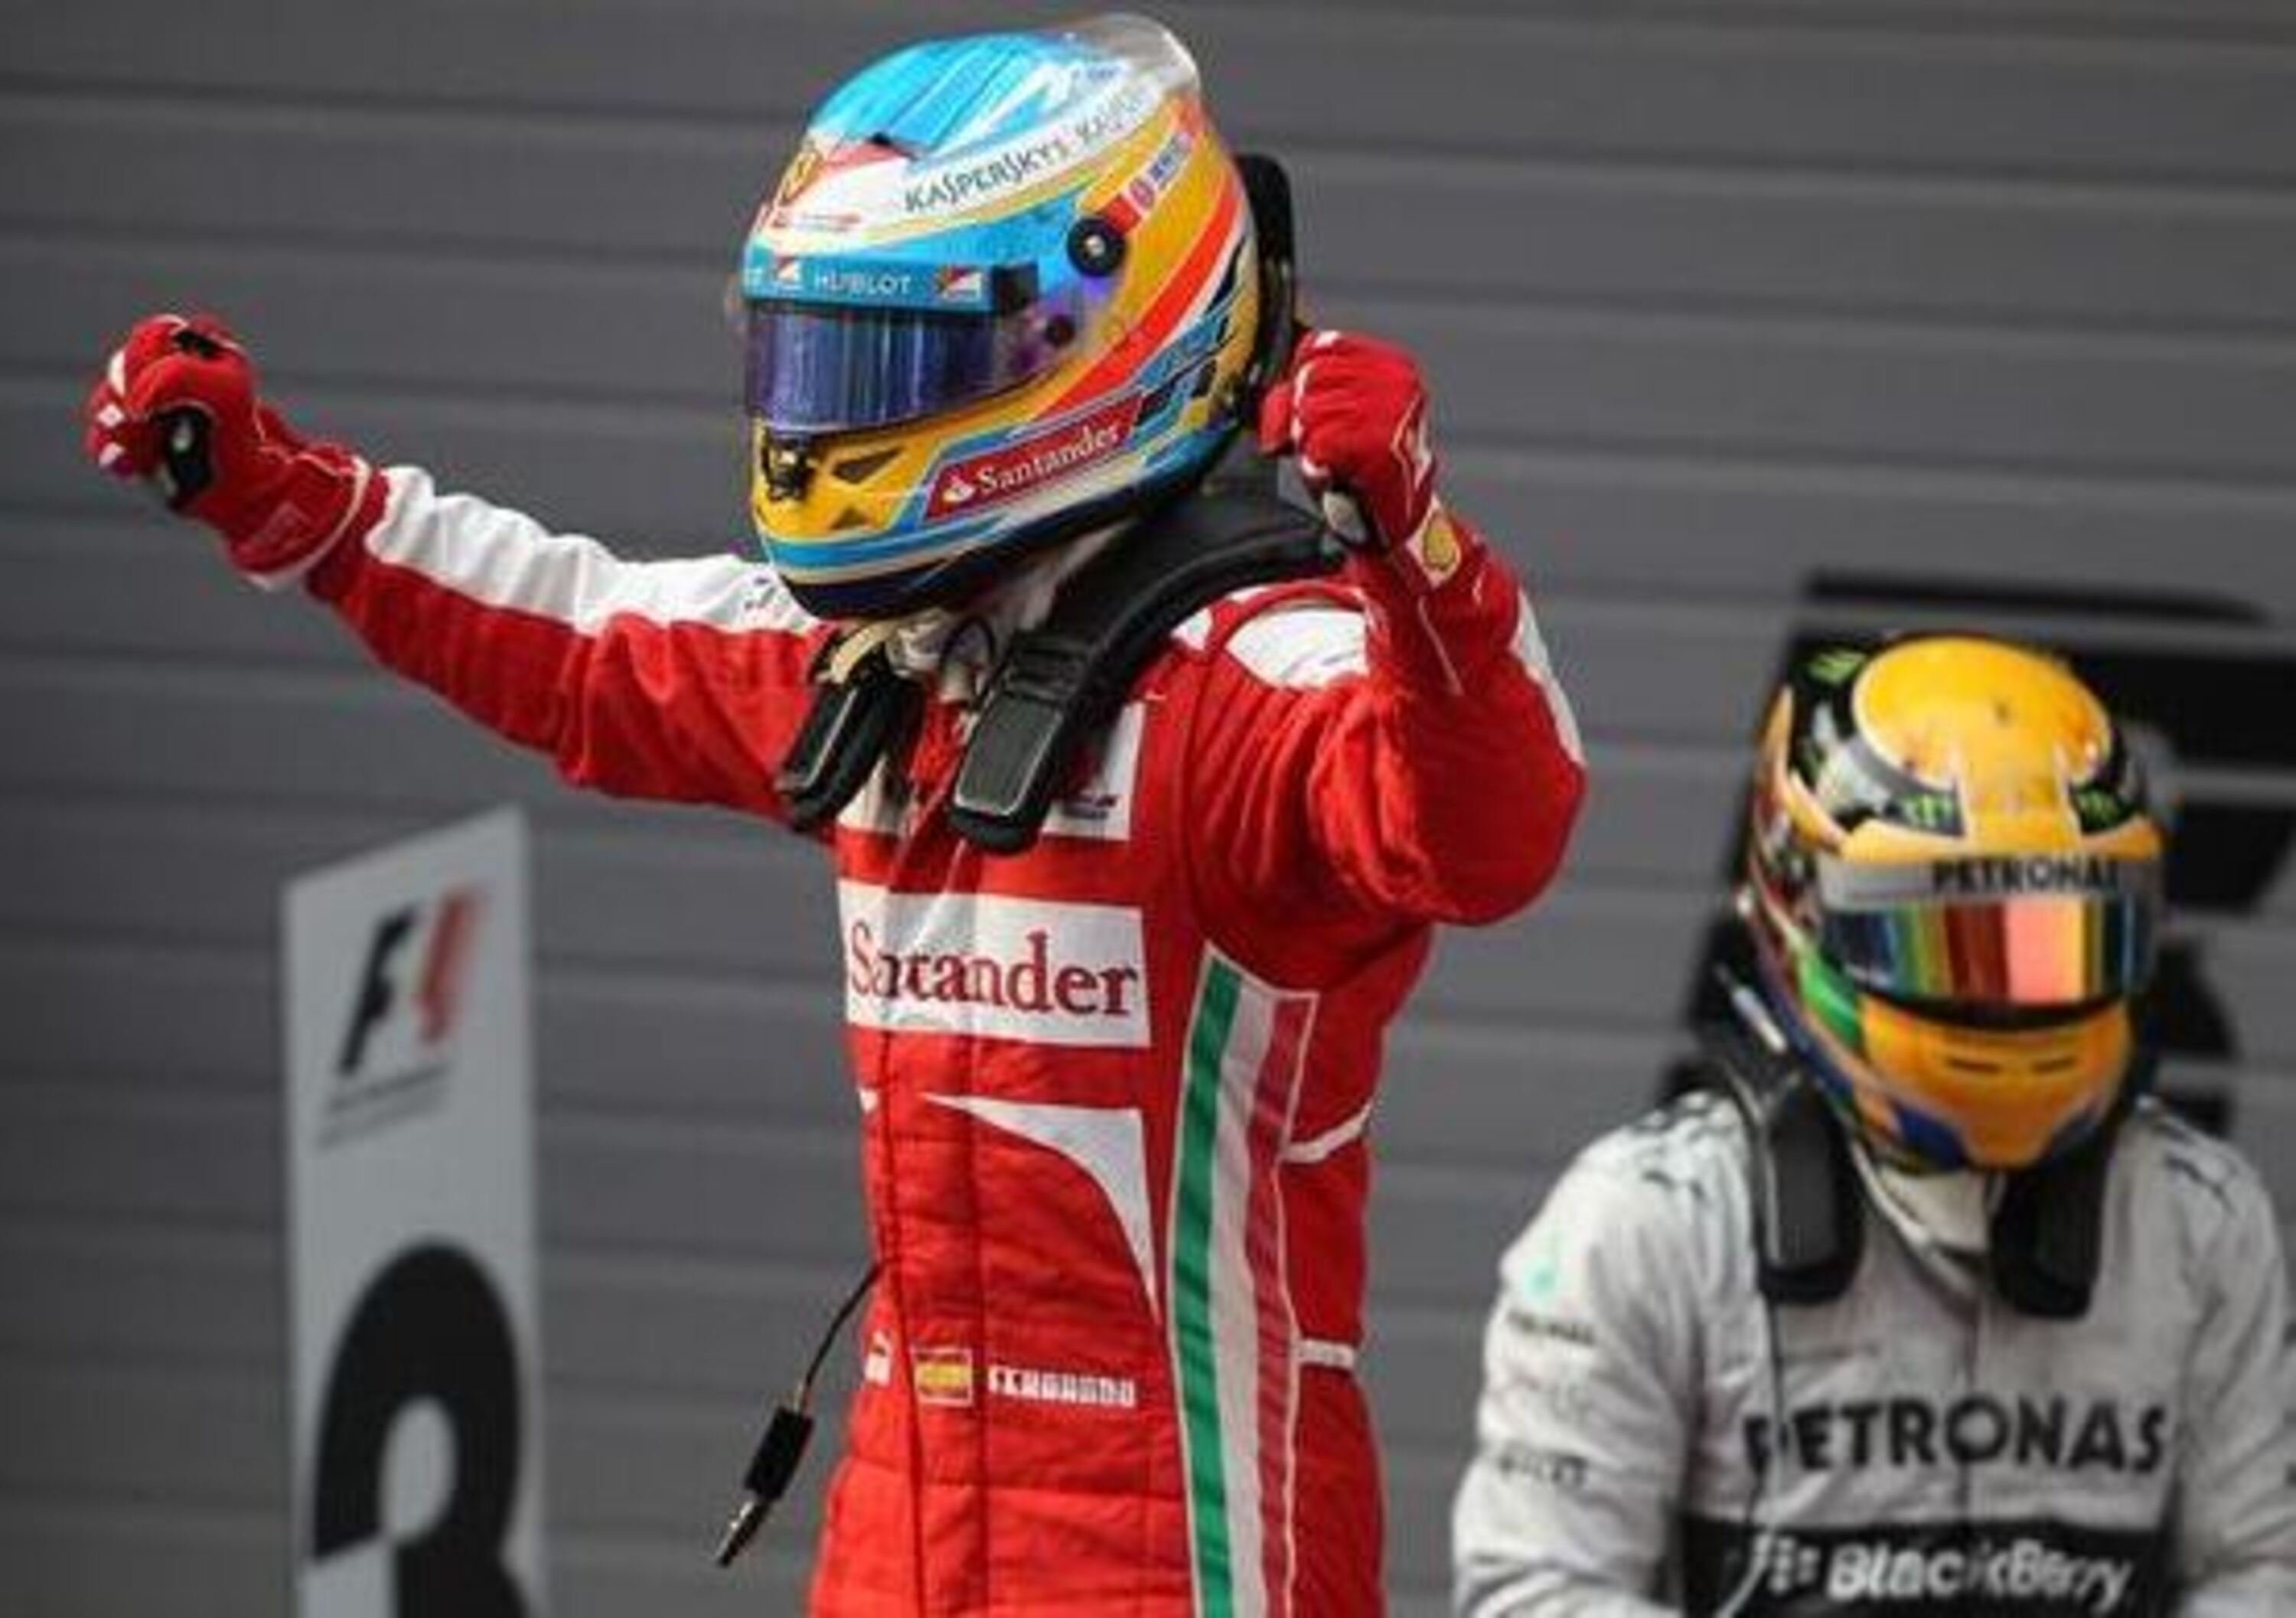 F1 GP Cina 2013: Alonso vince a Shanghai